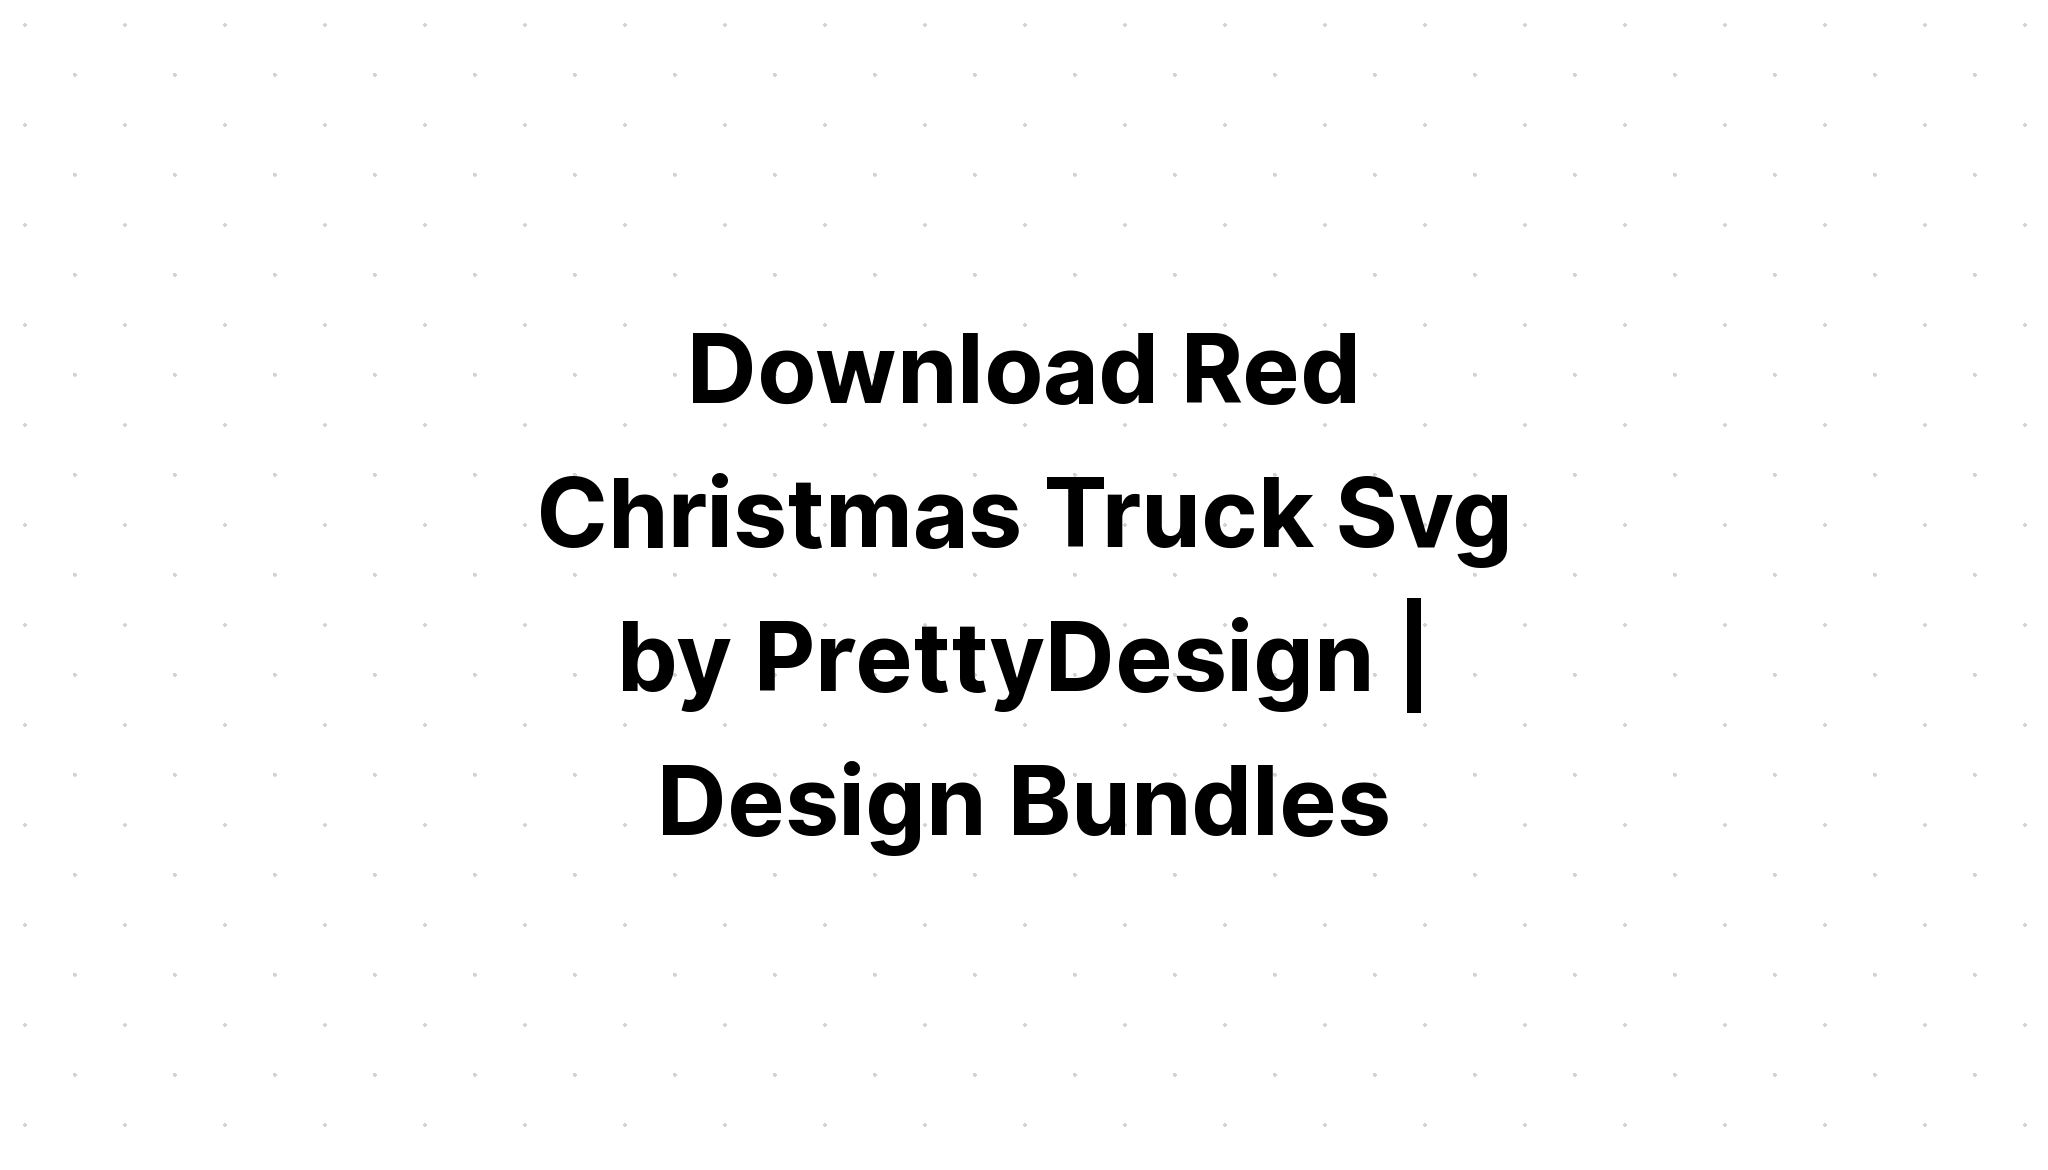 Download Free Red Truck Svg Bundle - Layered SVG Cut File